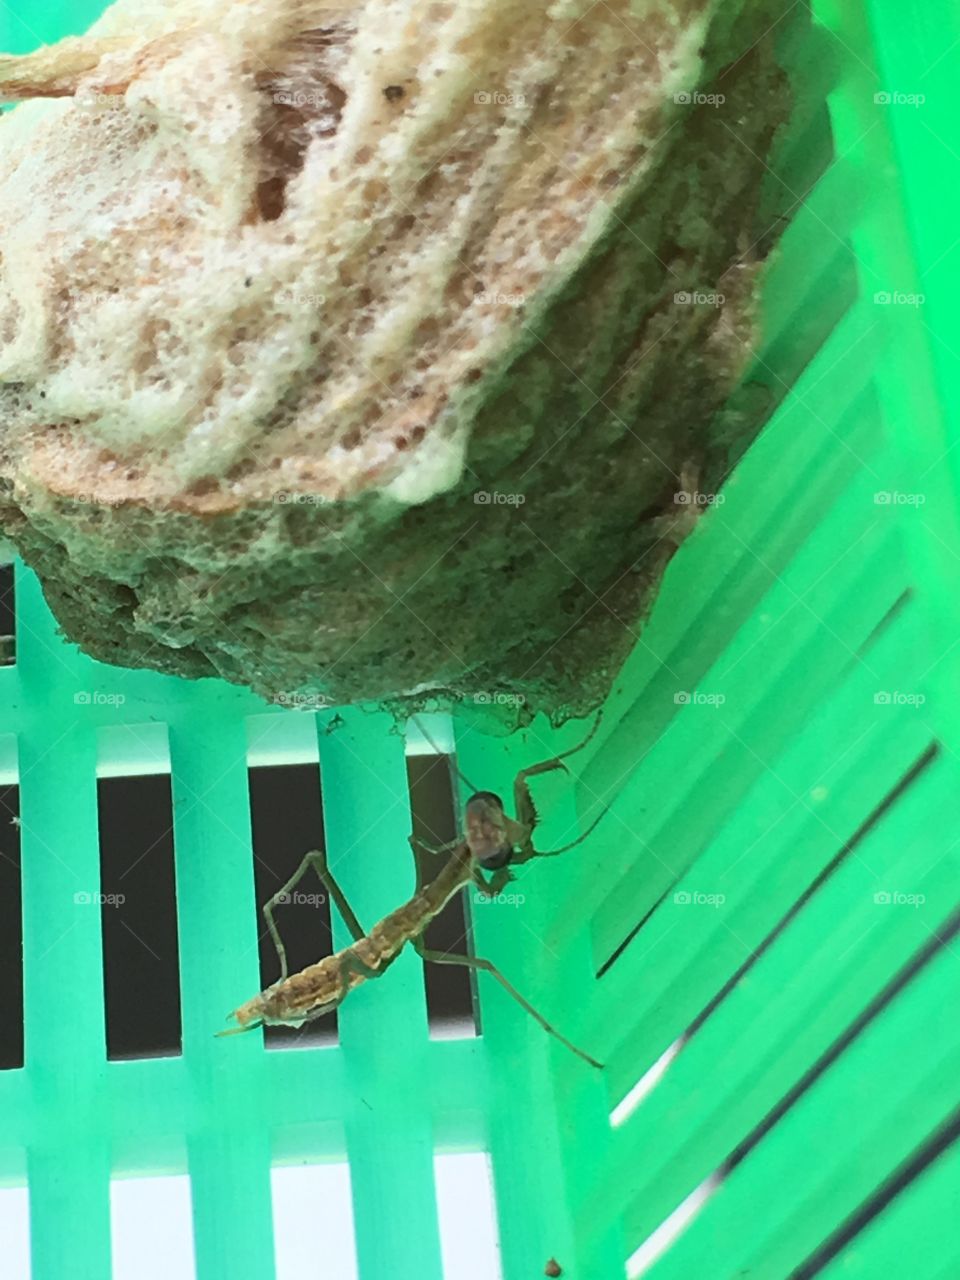 Newly hatched praying mantis 